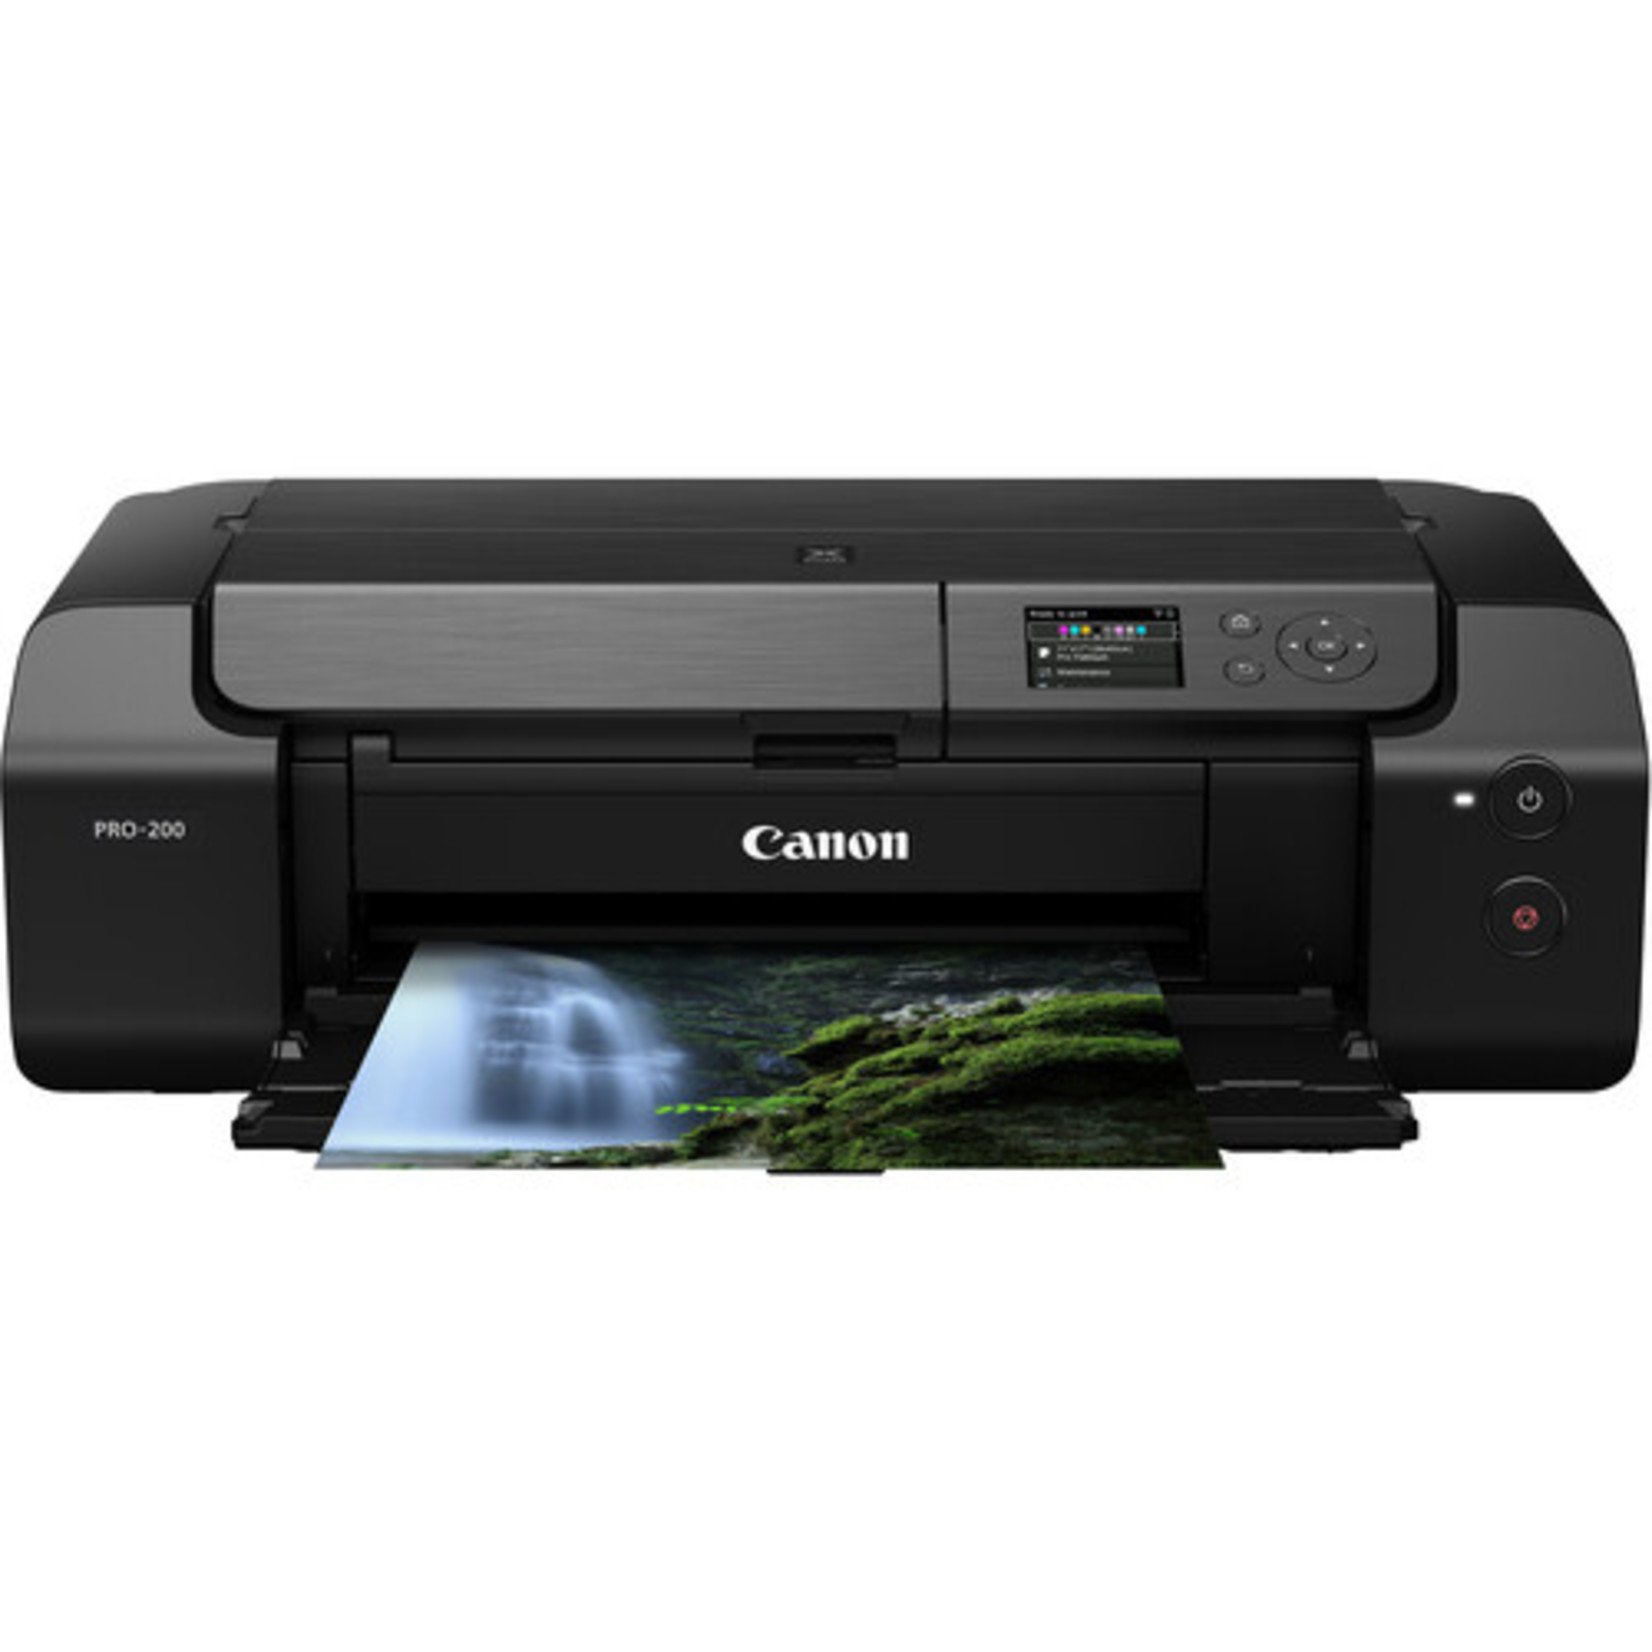 Canon Canon PIXMA PRO-200 Wireless Professional Inkjet Photo Printer